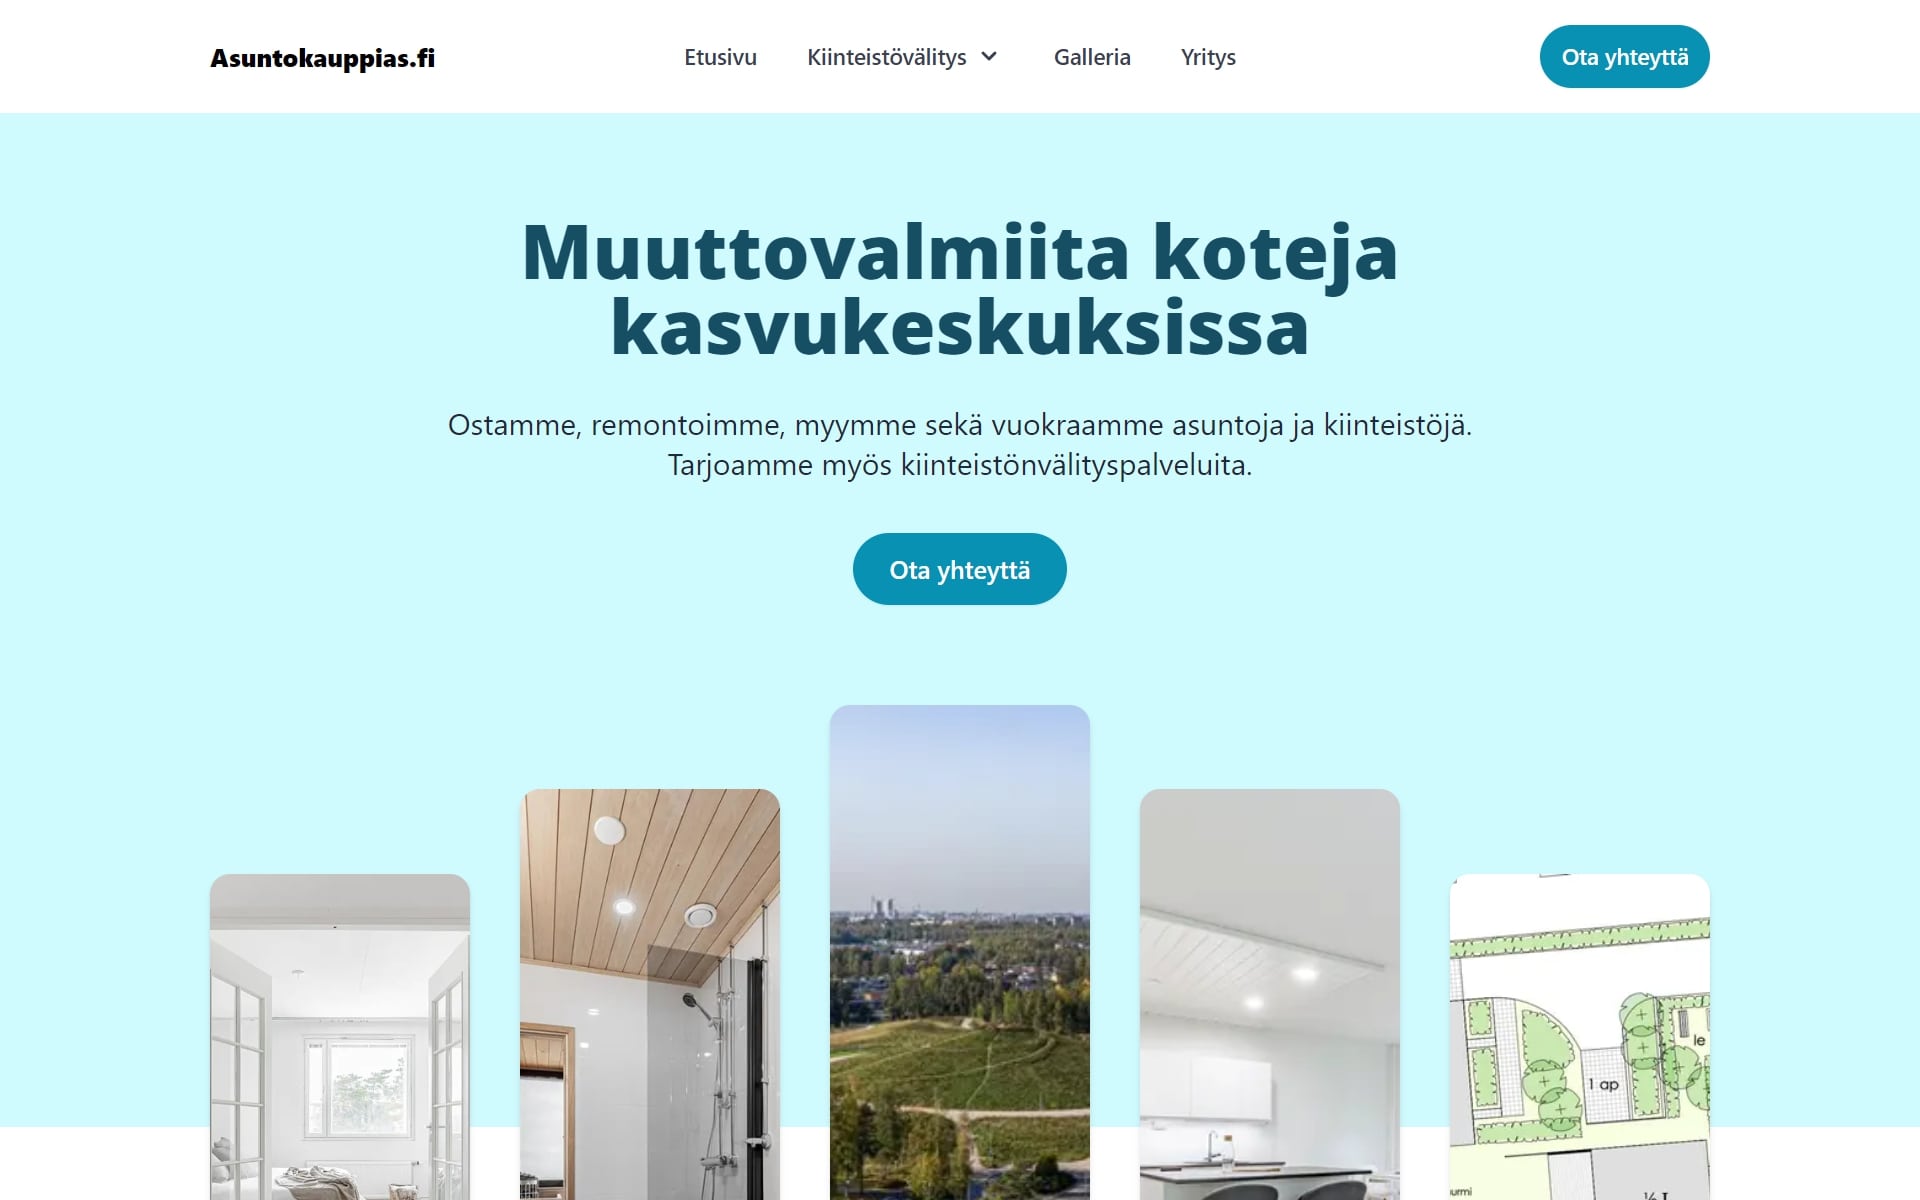 Asuntokauppias.fi